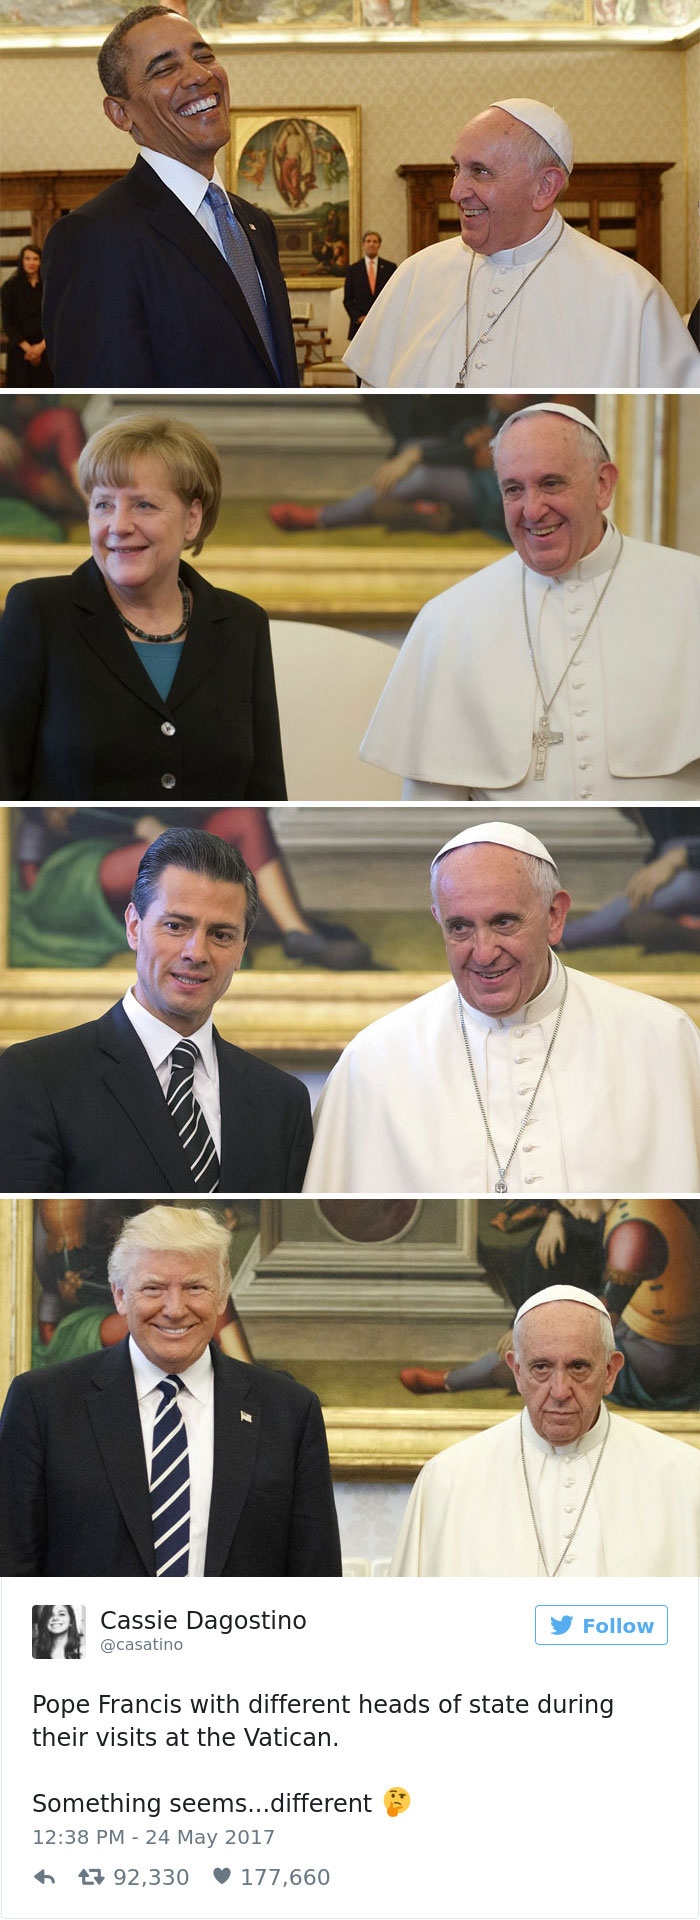 donald-trump-pope-francis-memes-16-59269410a1fbb__700